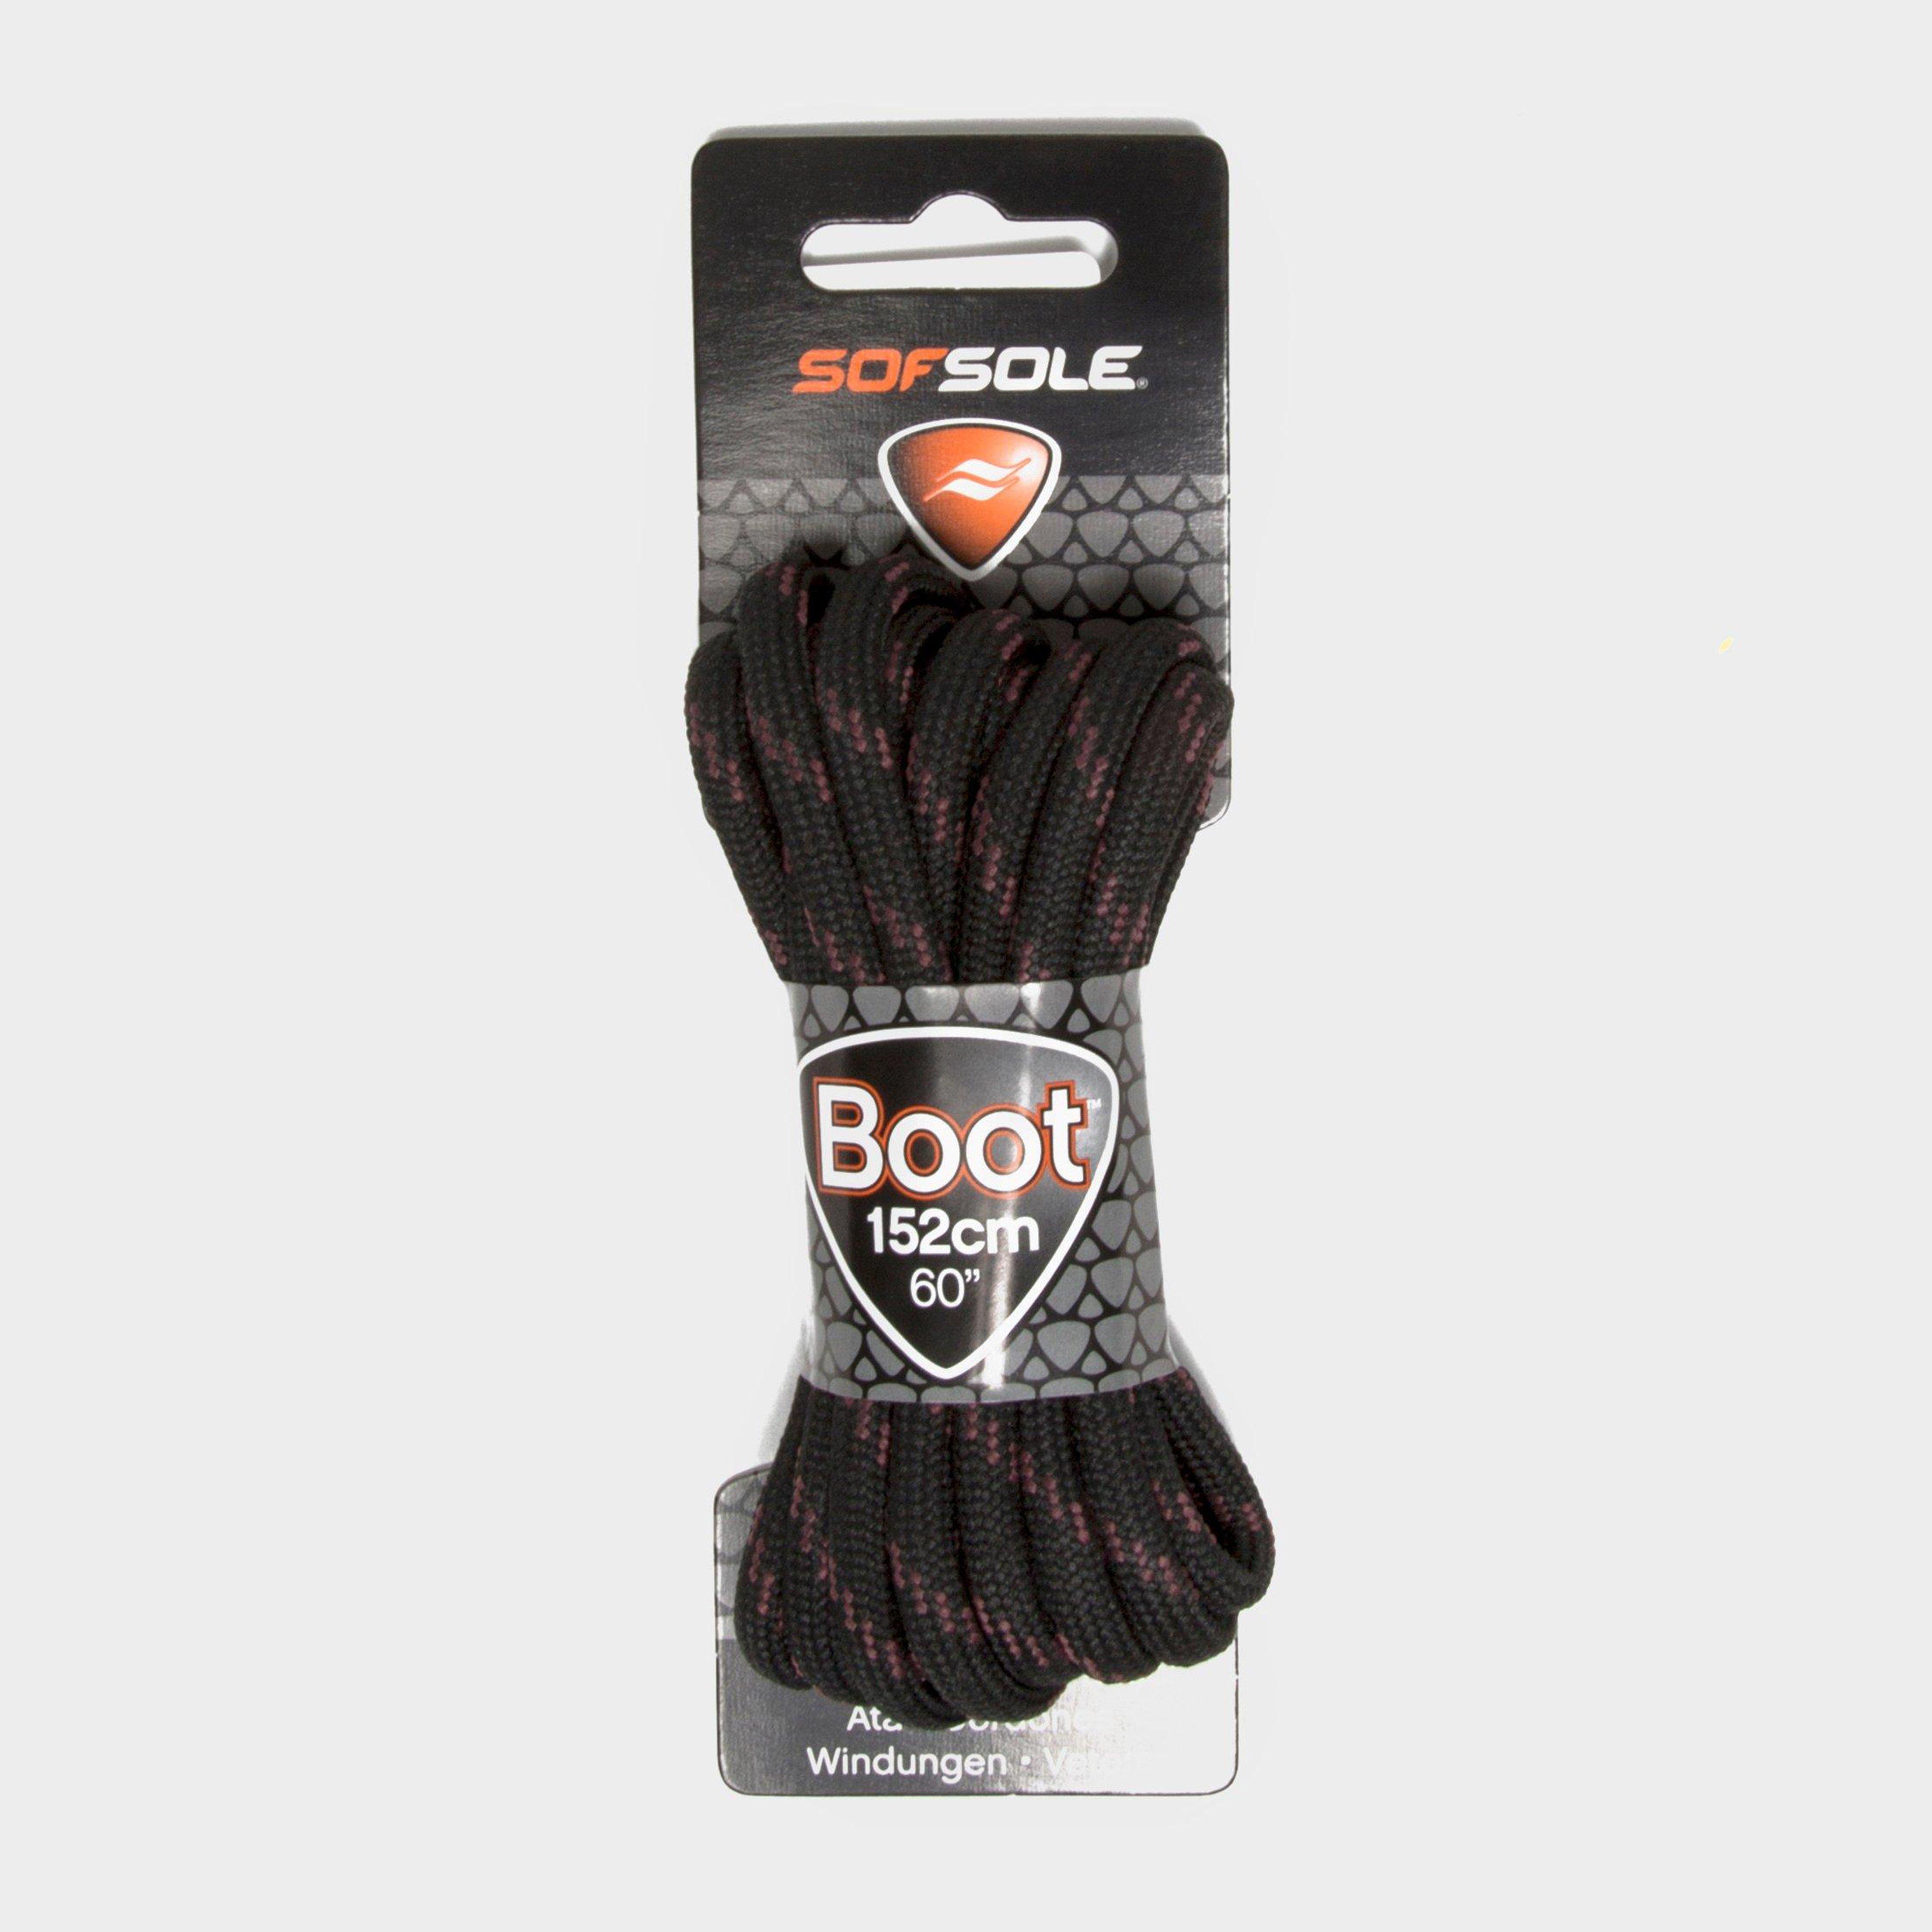 Sof Sole Wax Boot Laces - 152cm - Black/tan  Black/tan